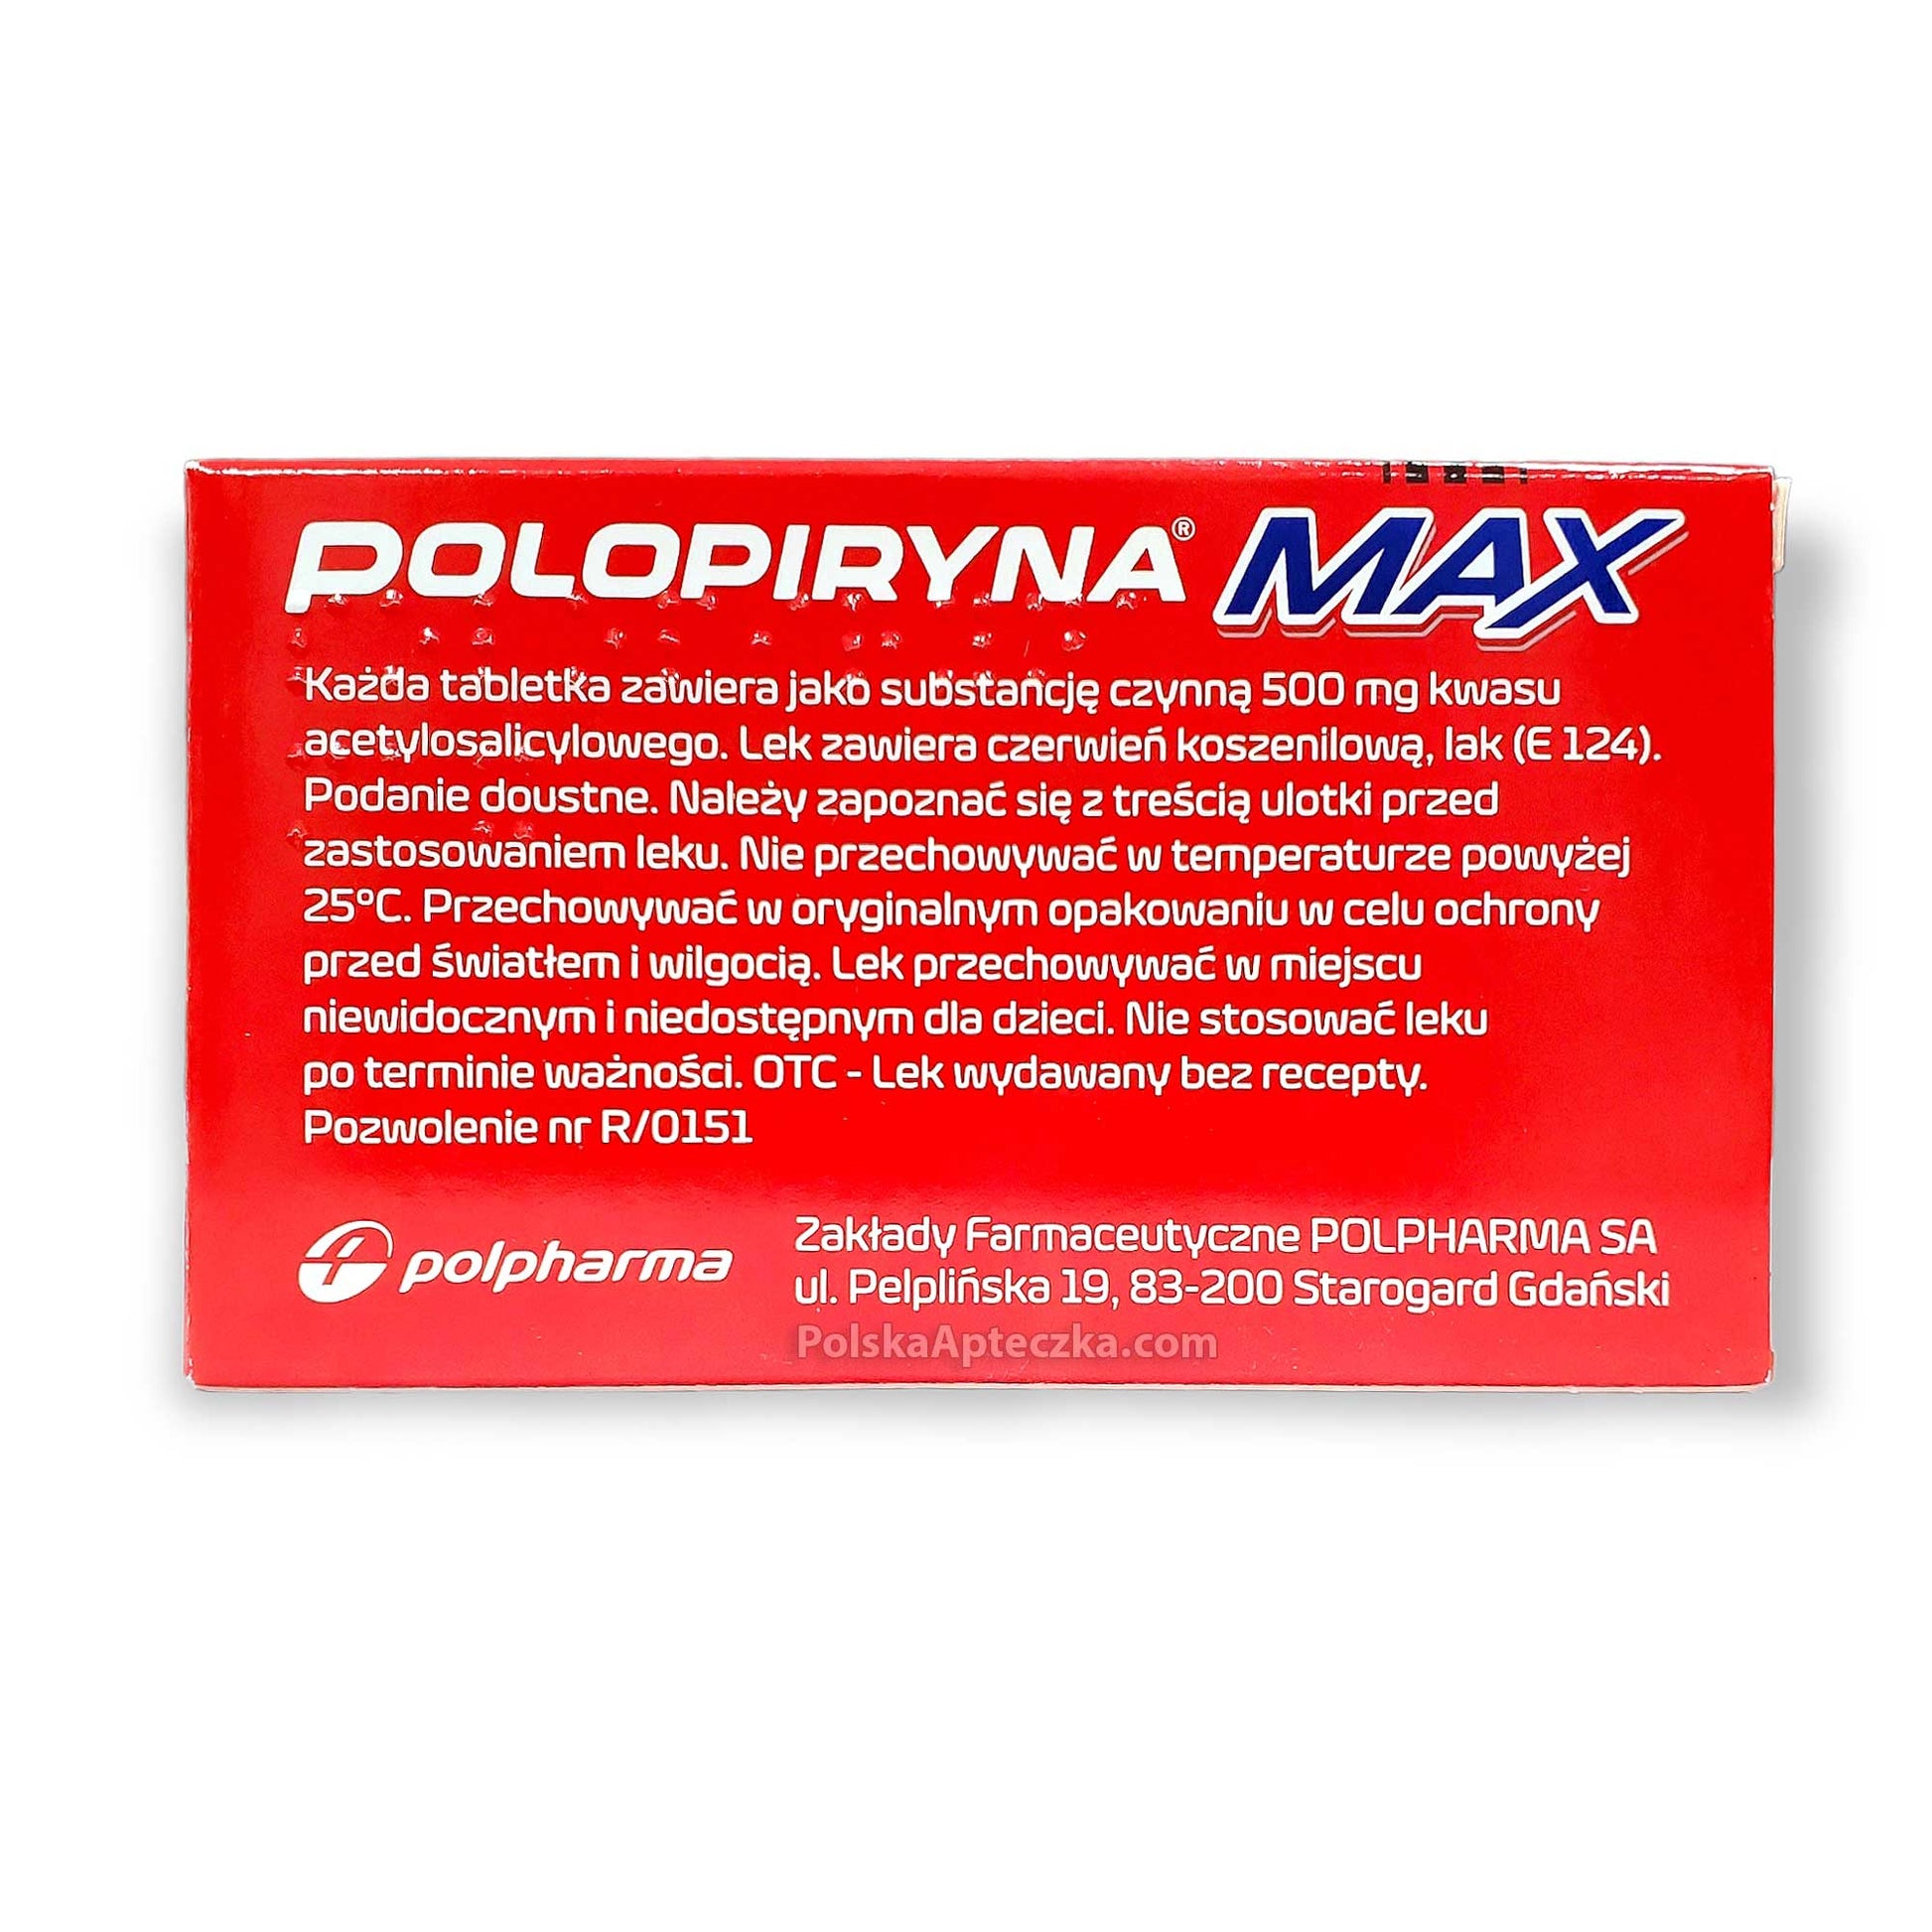 Polopiryna Max 500 mg, 20 tabletek